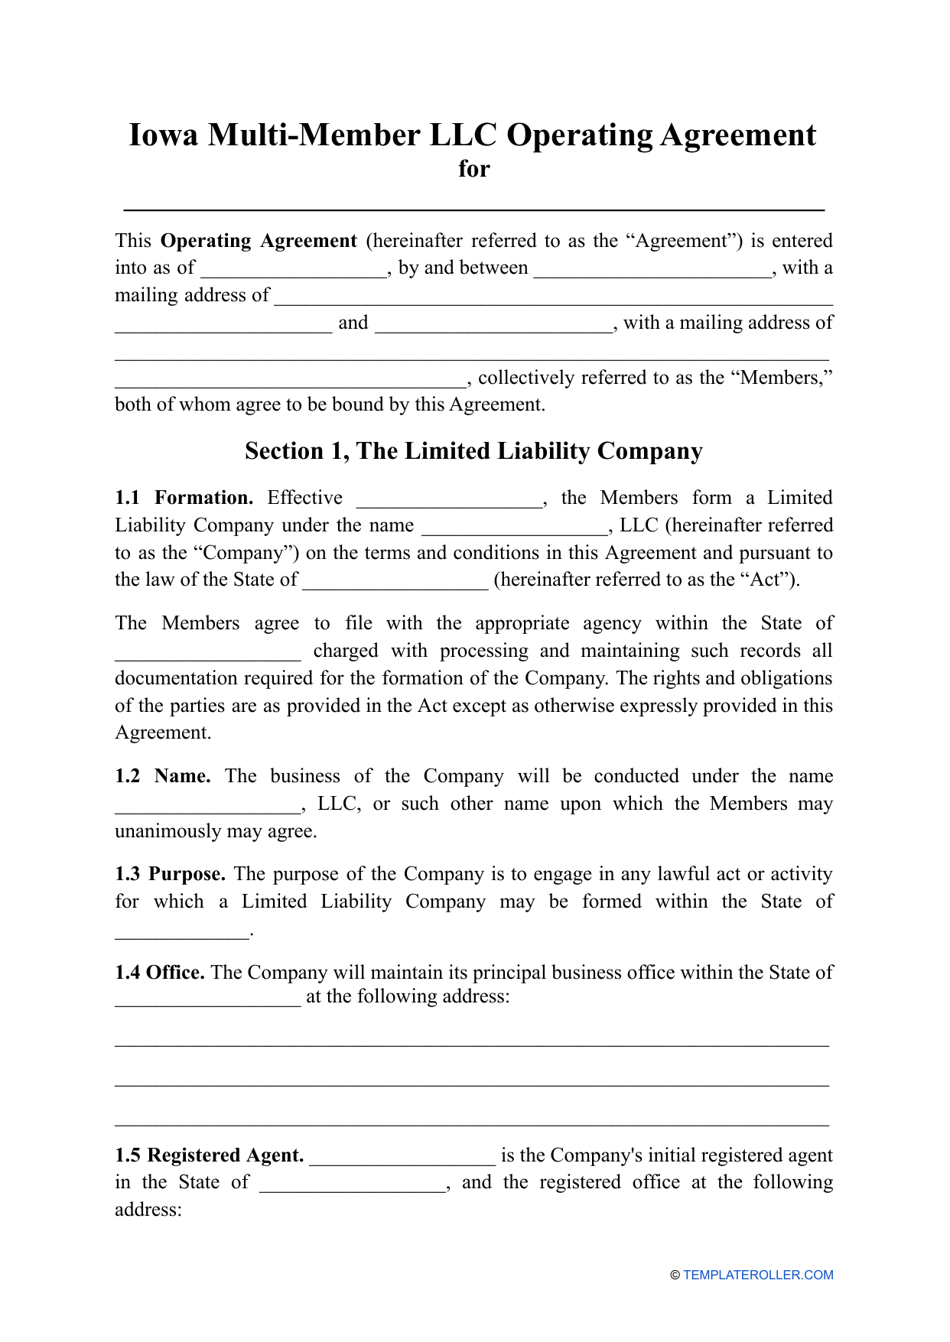 Multi-Member LLC Operating Agreement Template - Iowa, Page 1